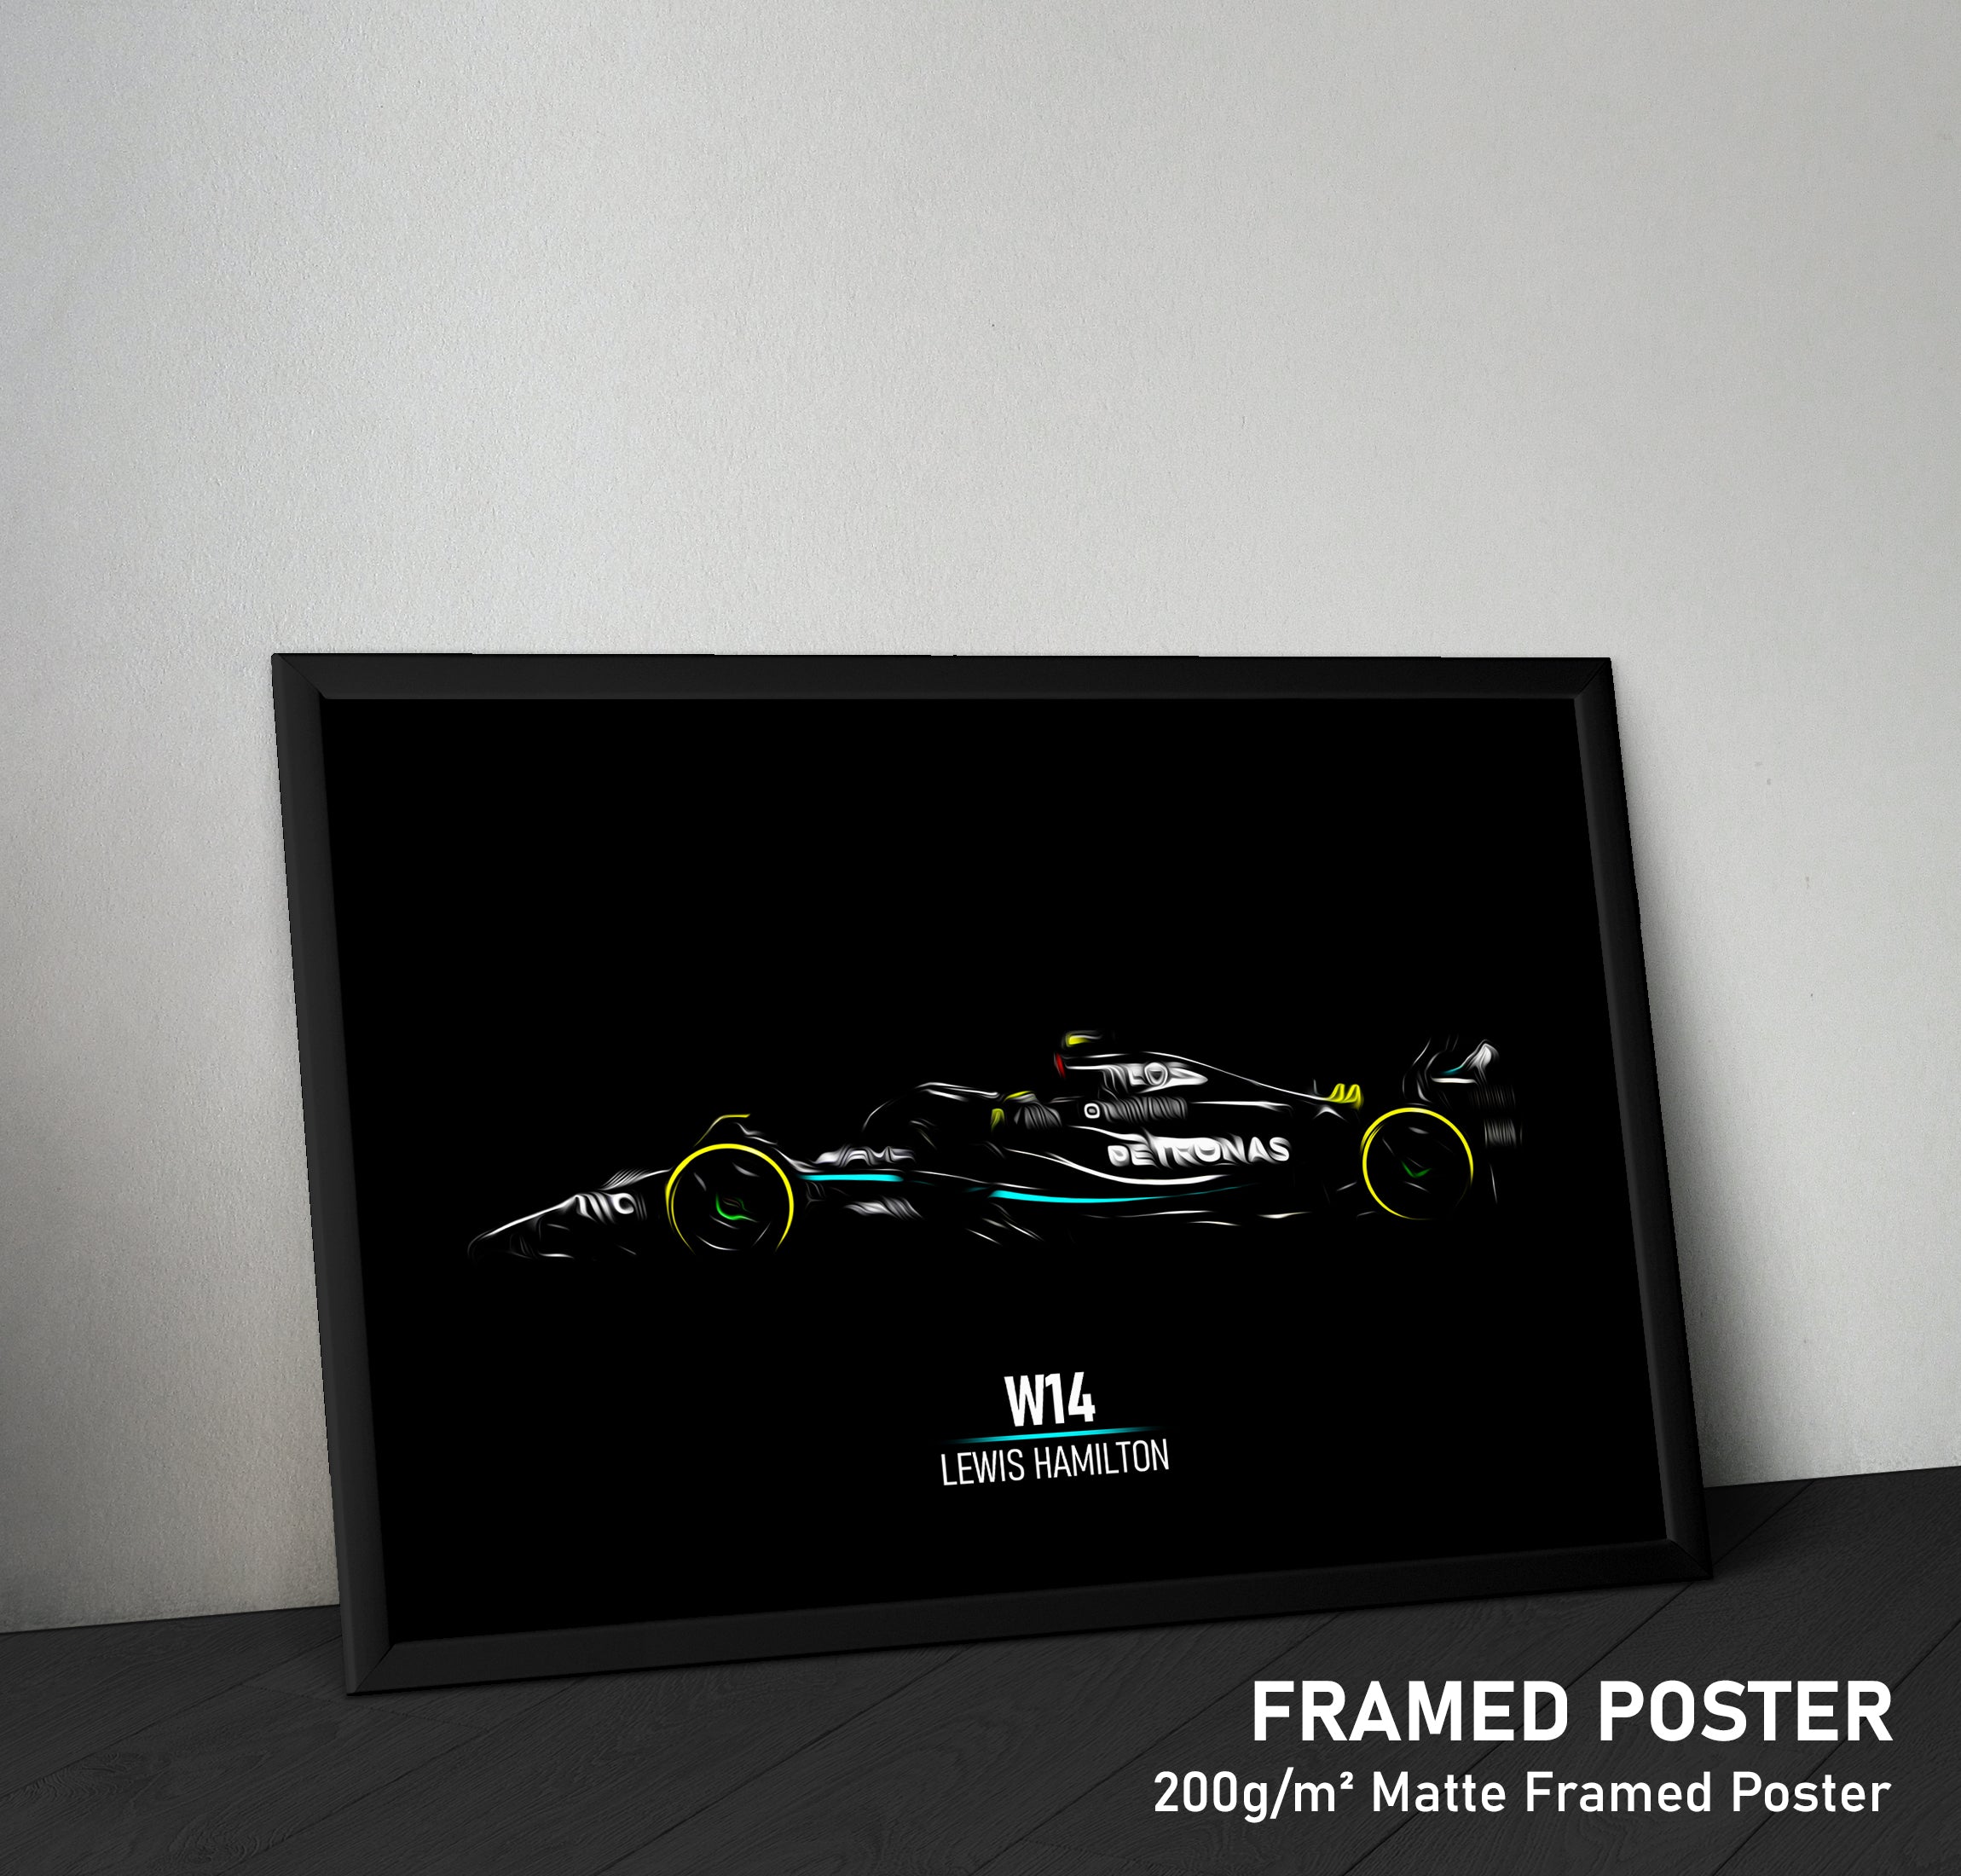 Mercedes W14, Lewis Hamilton - Formula 1 Framed Poster Print